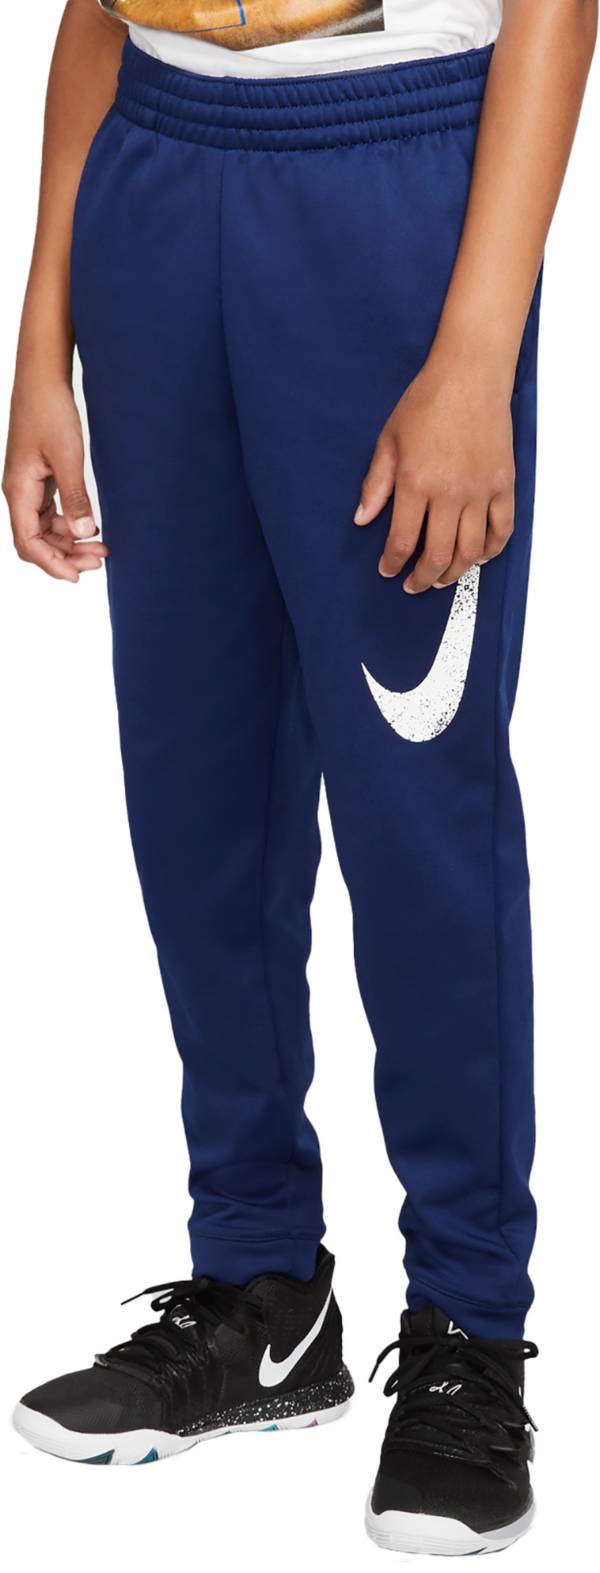 Nike Boys' Dri-FIT Therma Basketball Pants product image